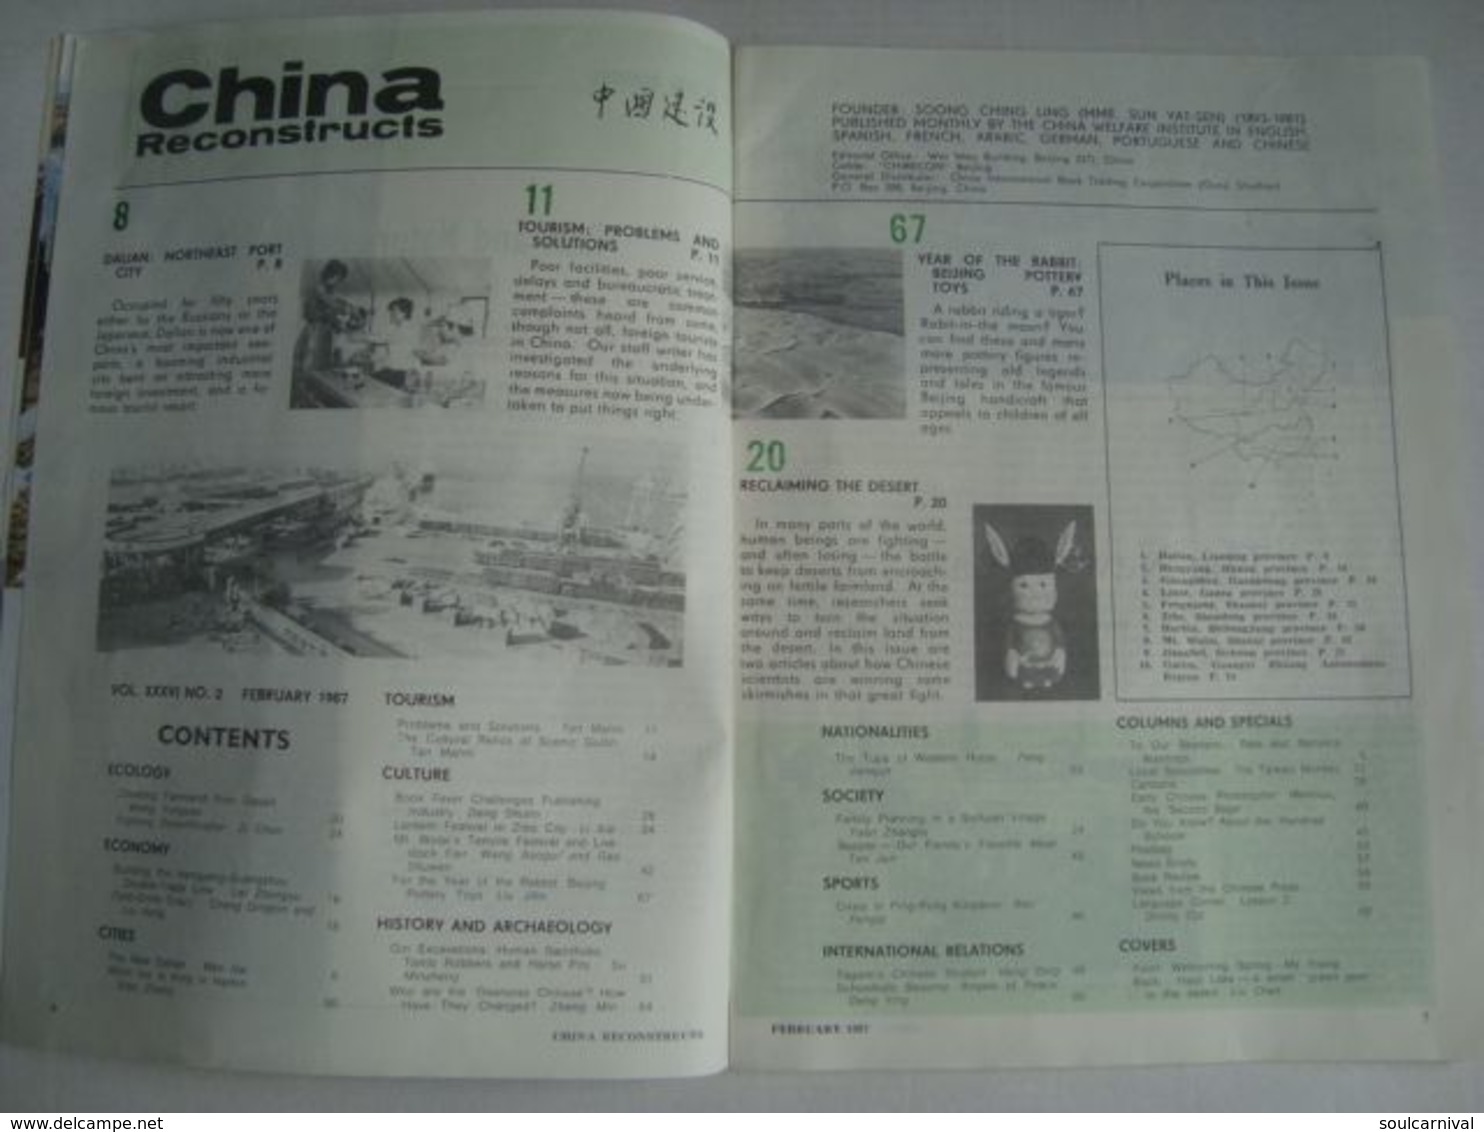 CHINA RECONSTRUCTS VOL. XXXVI Nº 2. RECLAIMING THE DESERT. DAILIAN-NORTHERN PORT CITY (FEBRUARY 1987). - Voyage/ Exploration